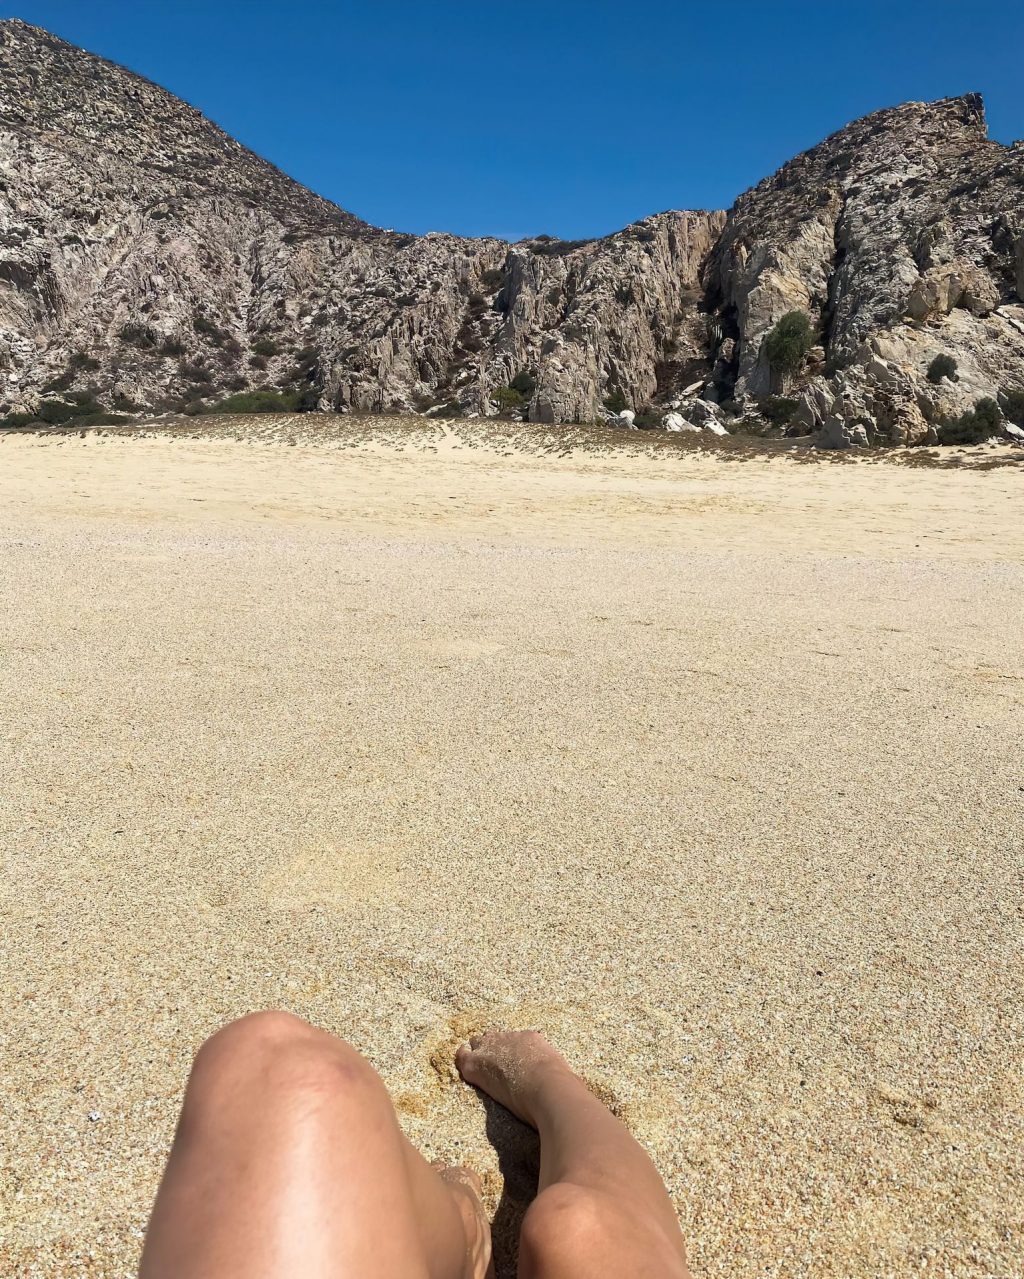 Lindsey Pelas Enjoys Her Vacation in Mexico (9 Photos)